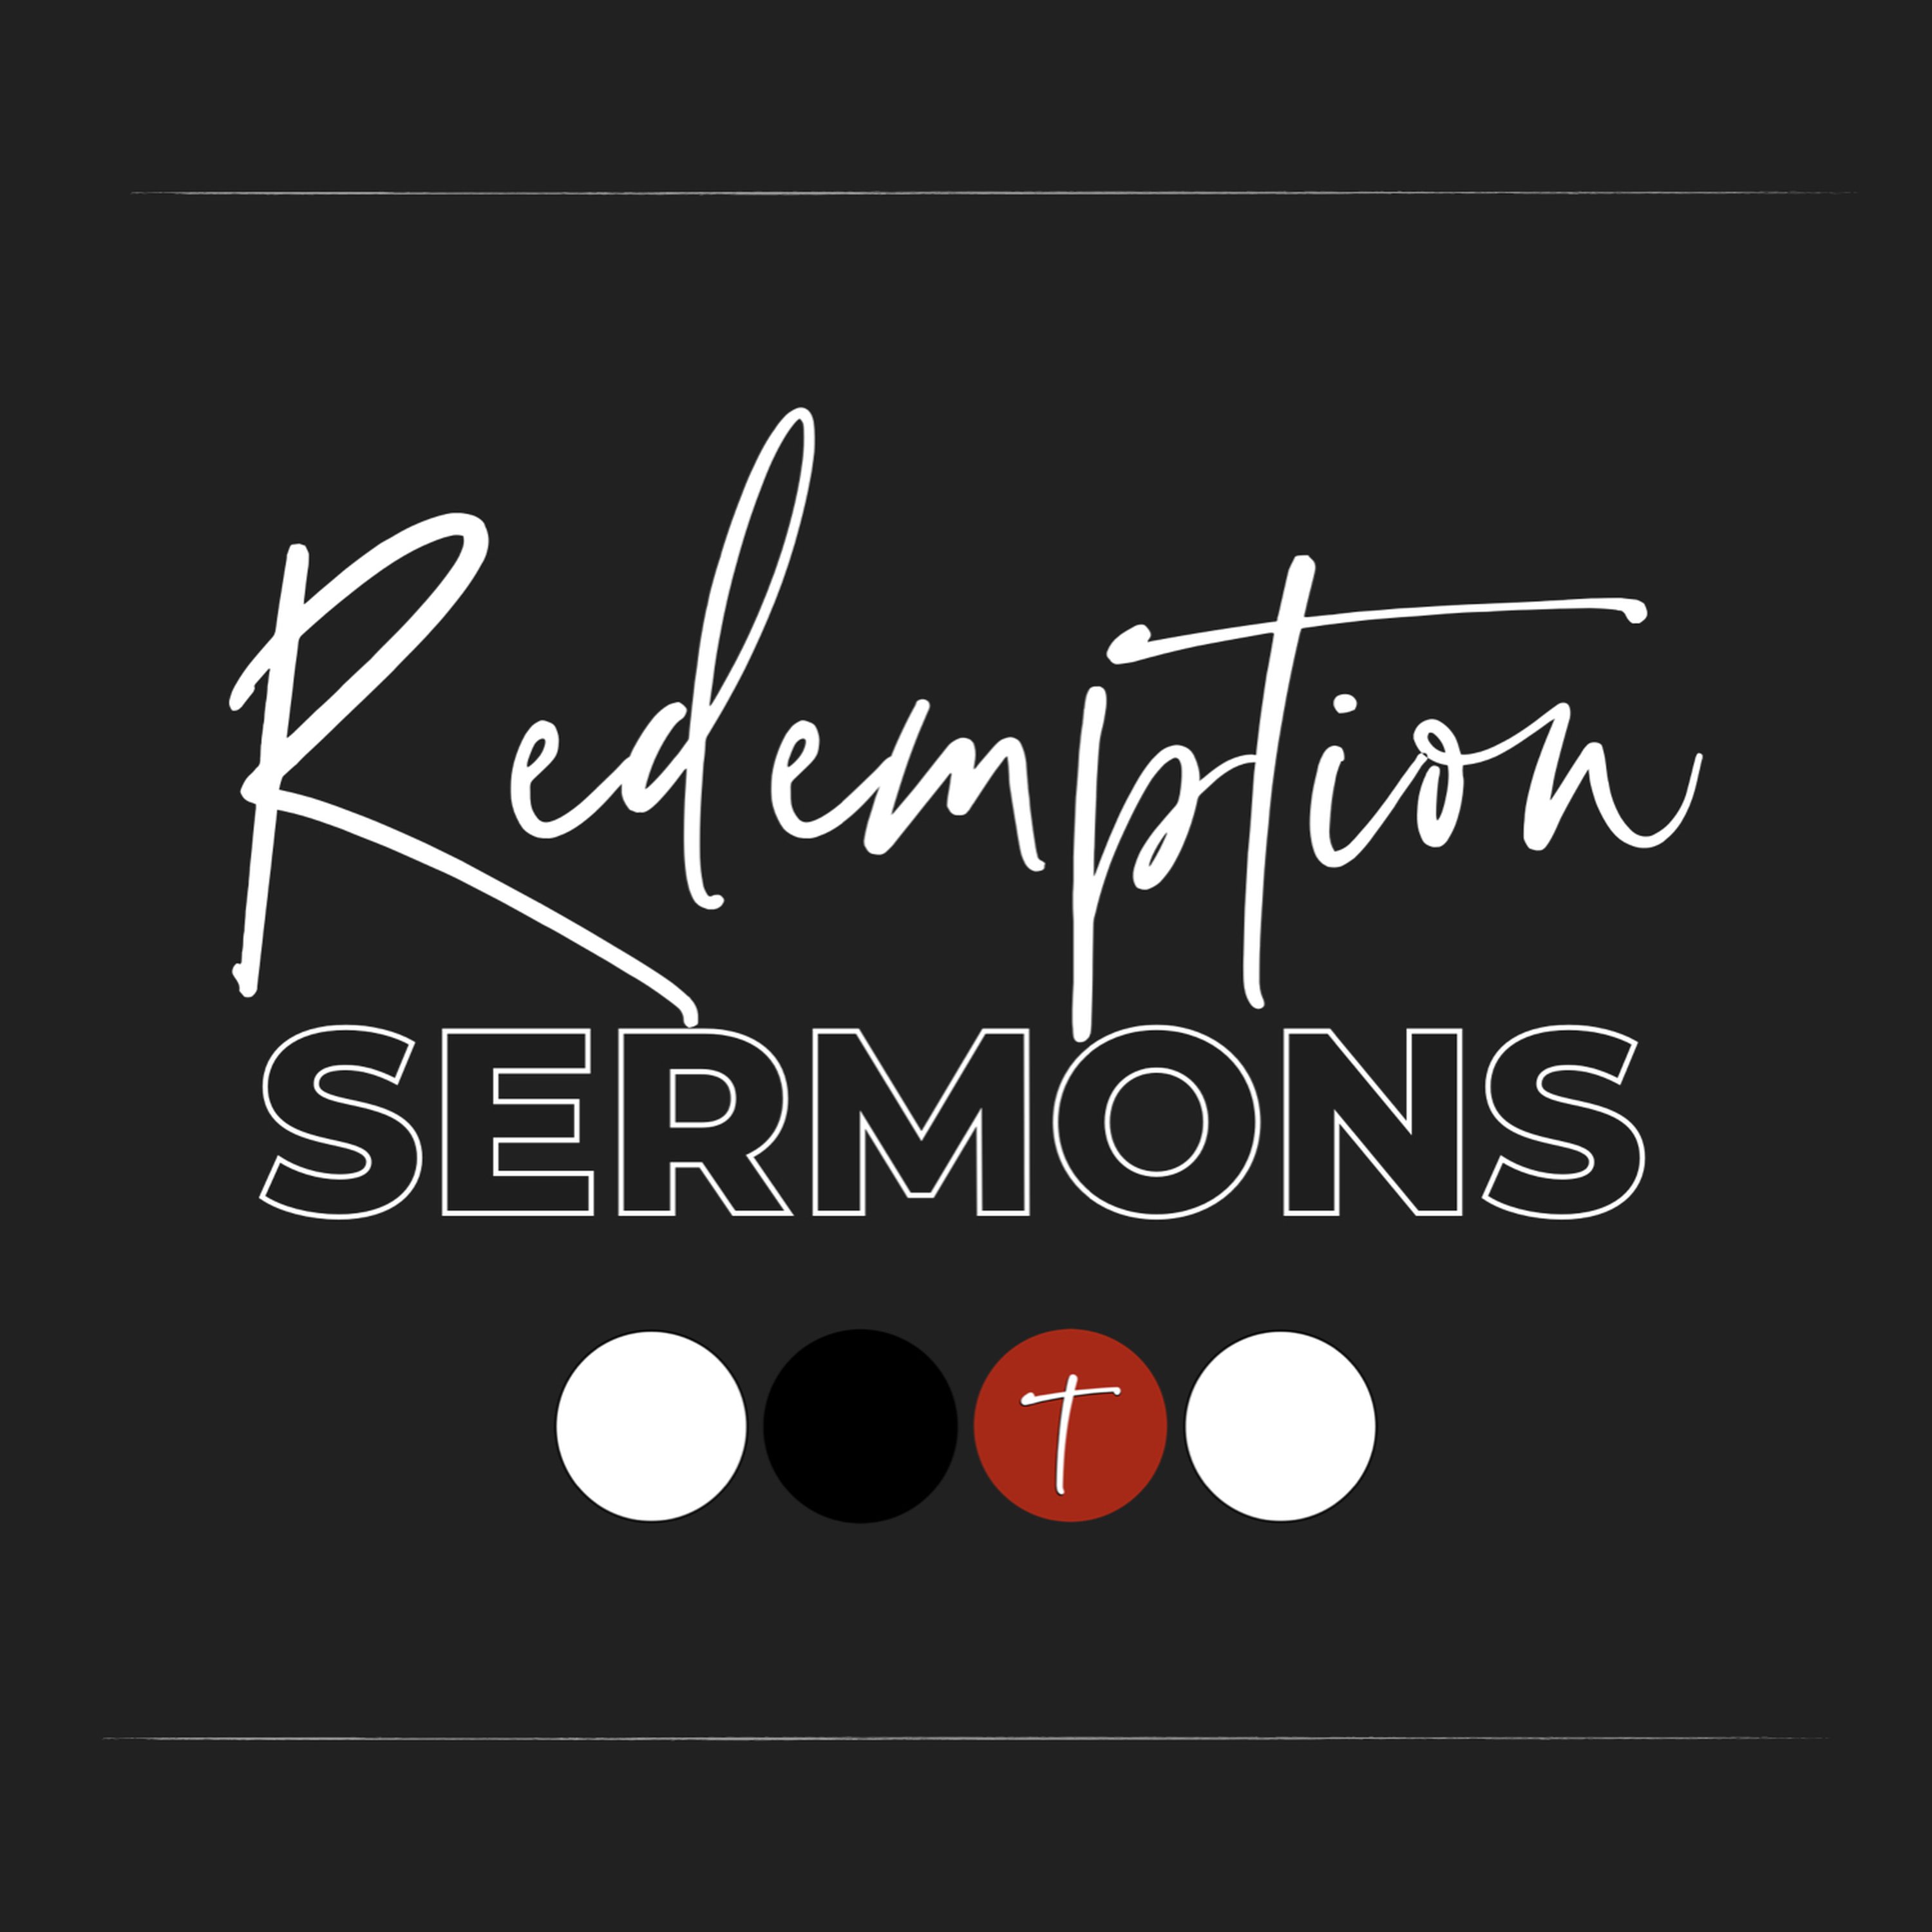 Redemption Church Lugoff Sermons